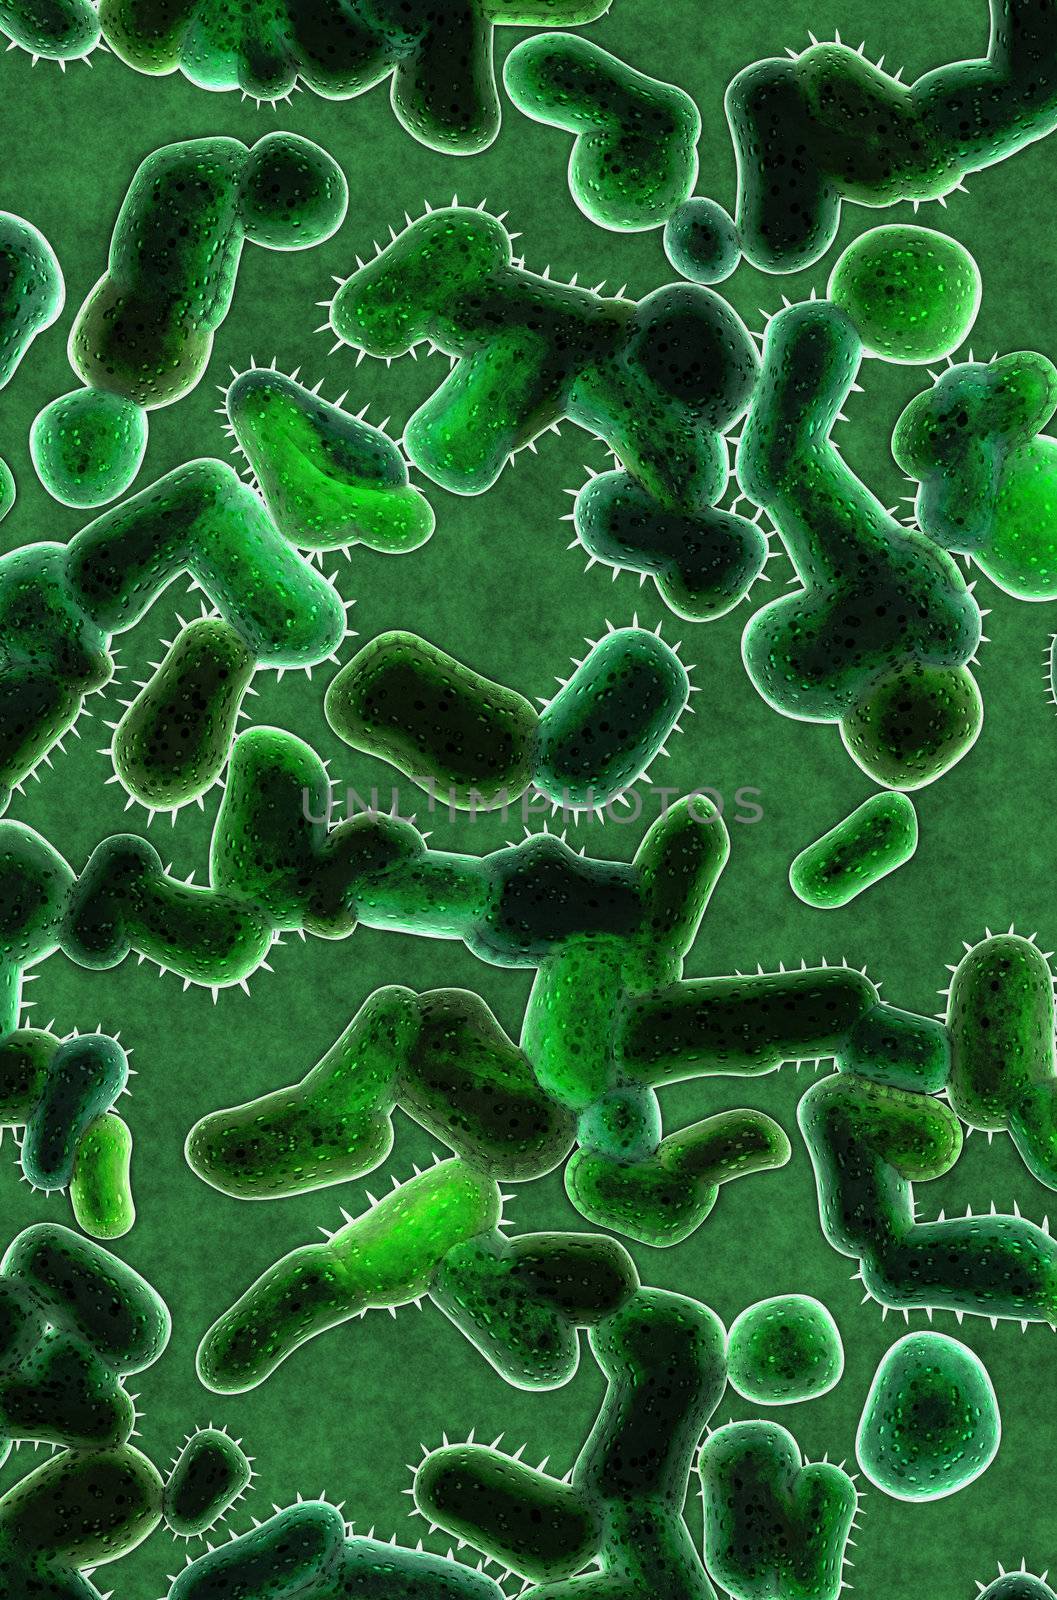 Colony of dangerous bacteria